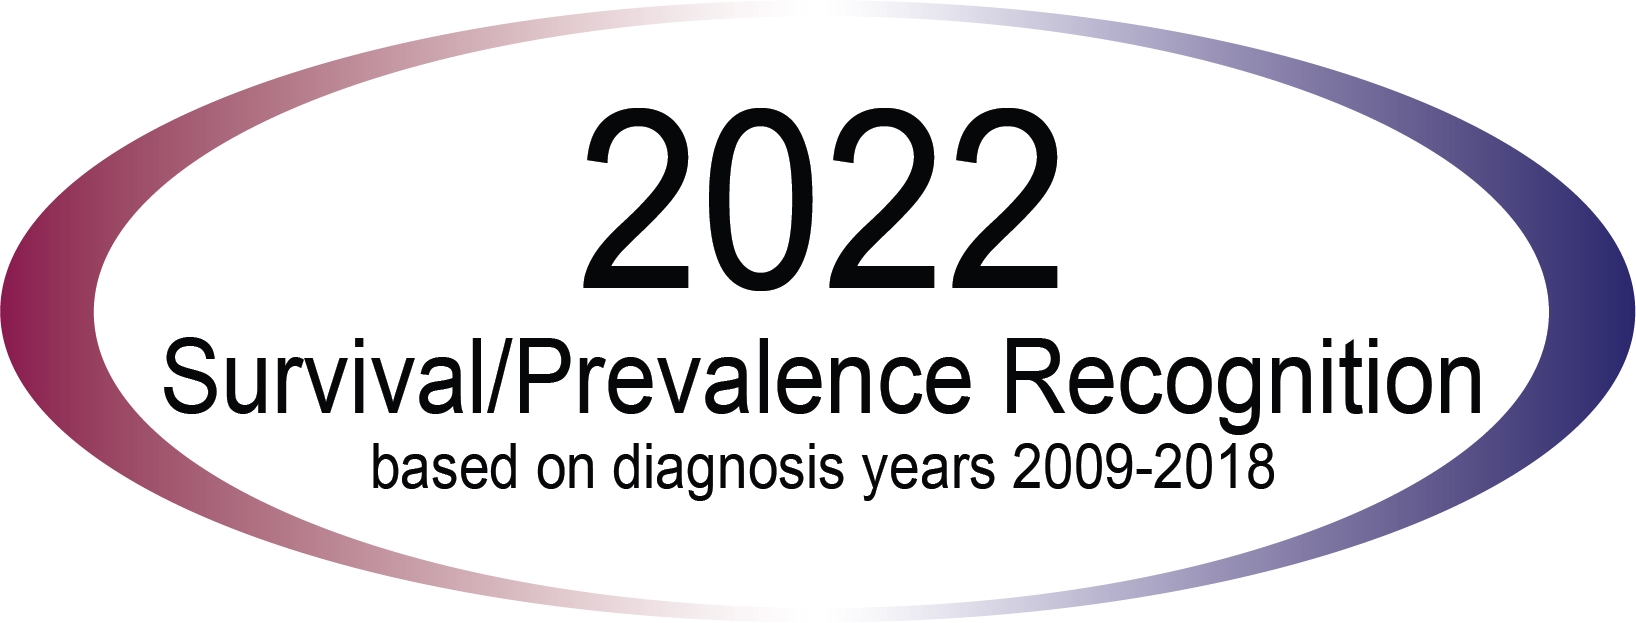 2022 Survival/Prevalence Recognition